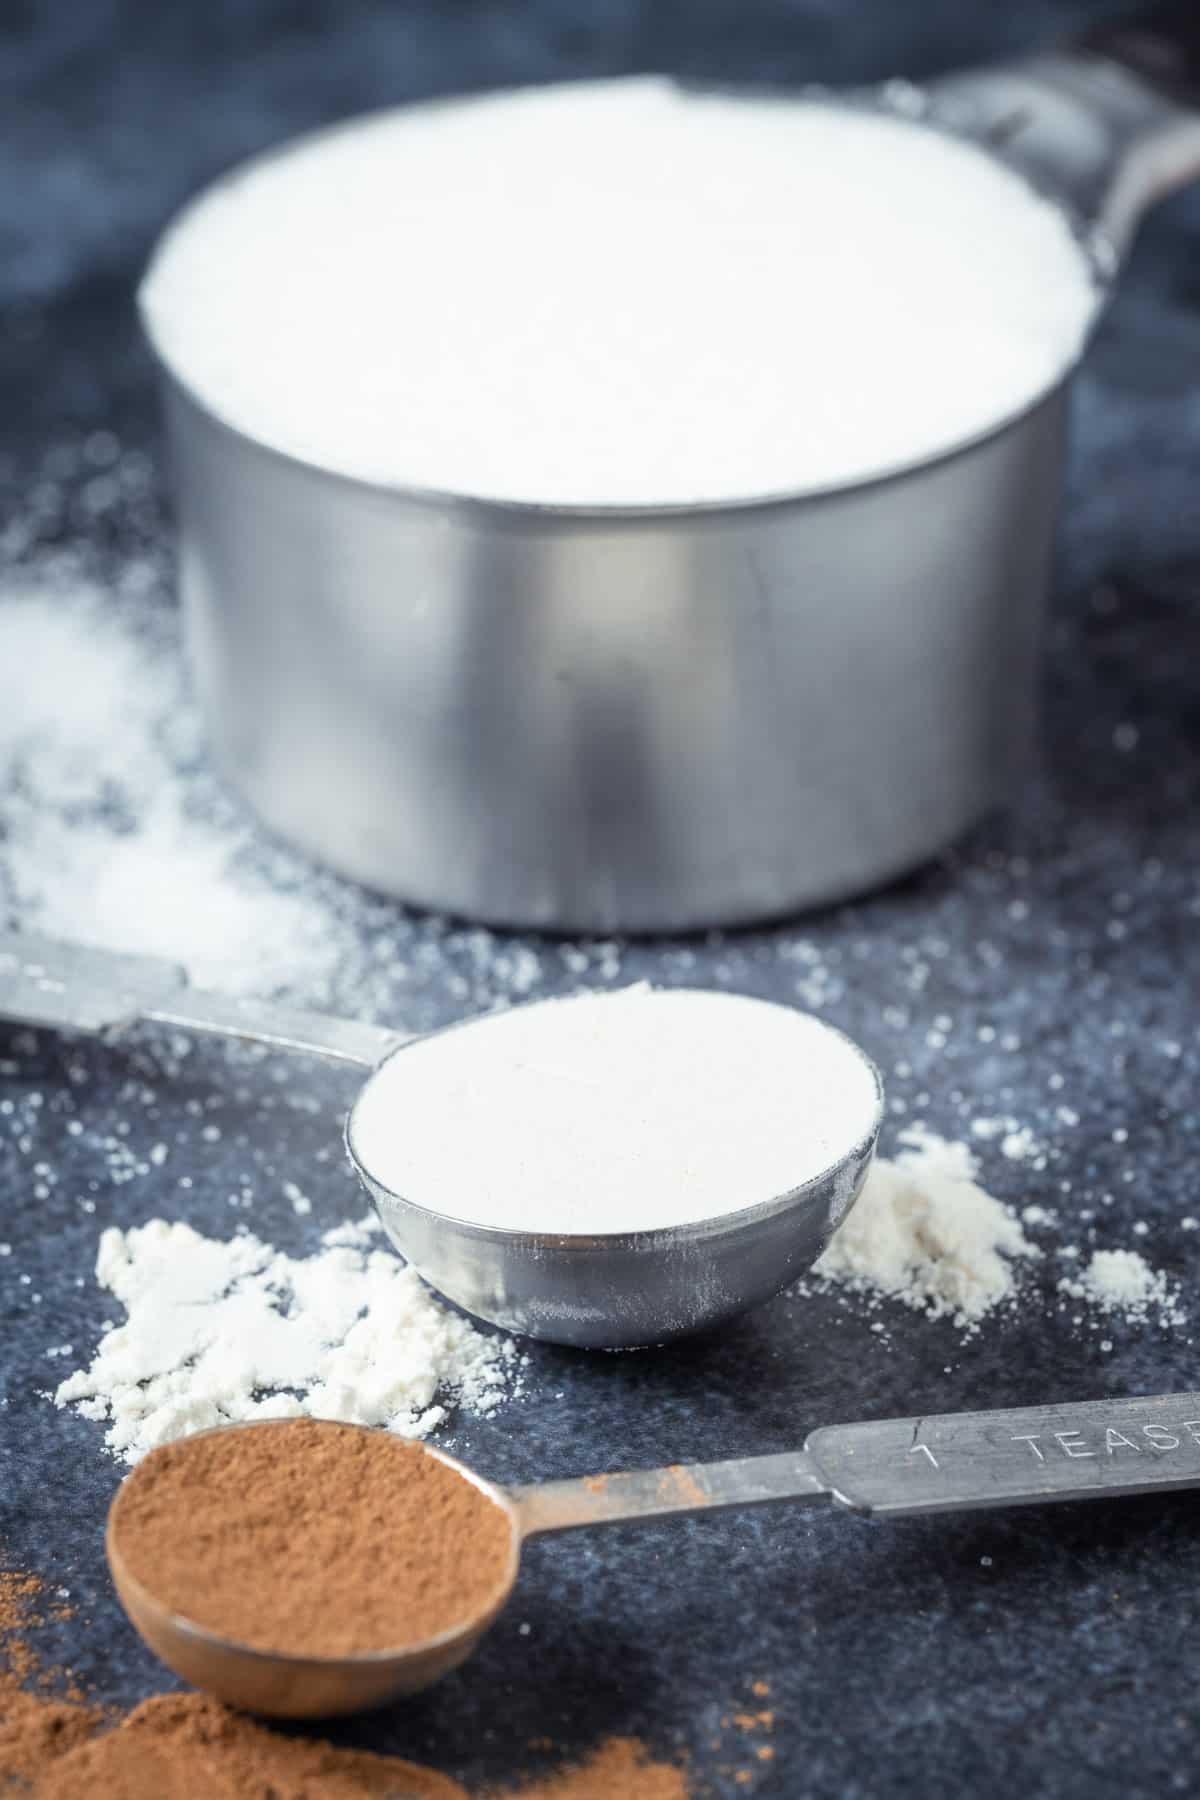 Flour, cinnamon, sugar etc in cups, tablespoons and teaspoons.